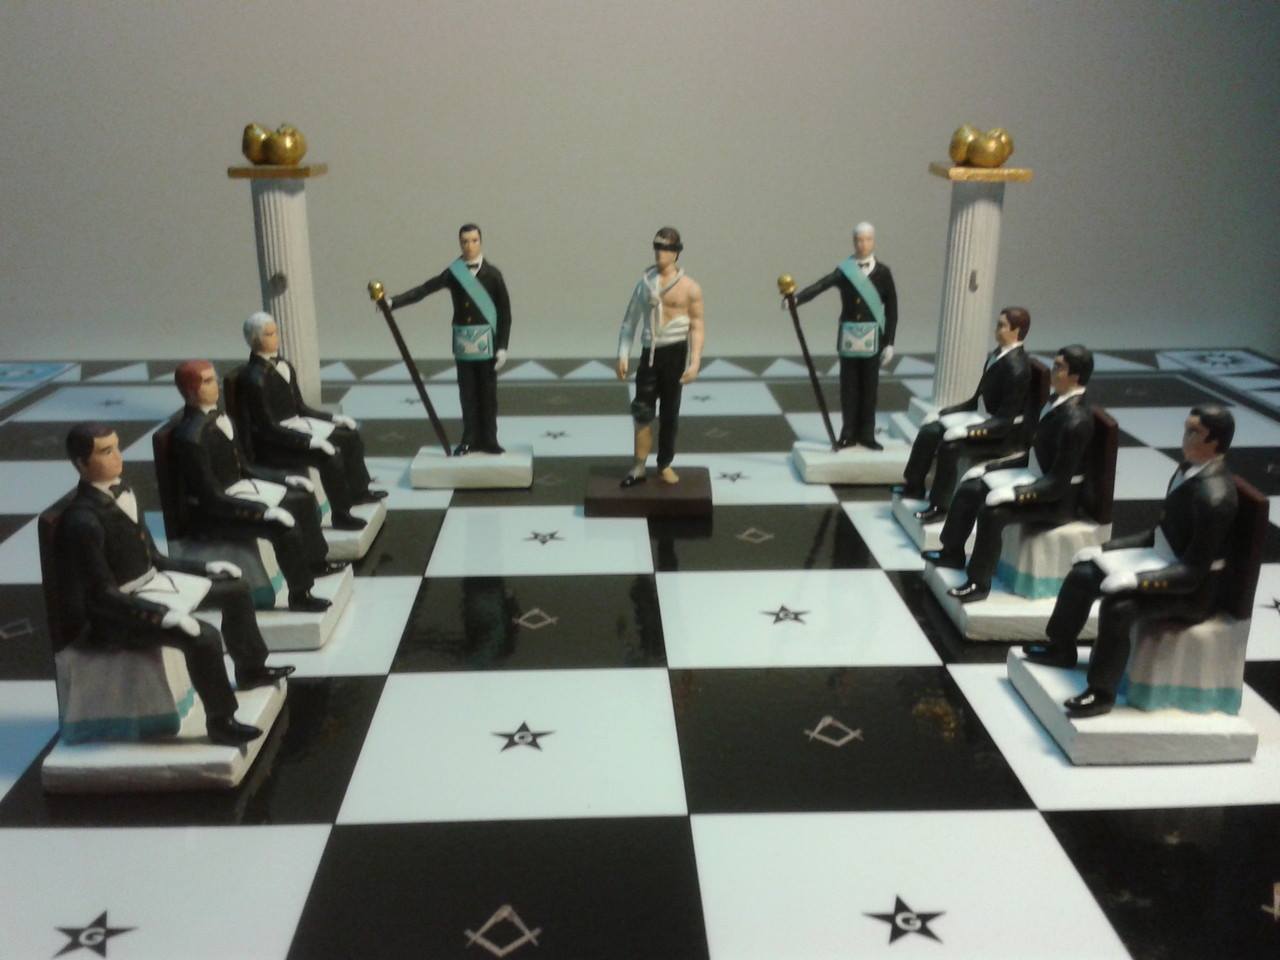 enochian chess of the golden dawn